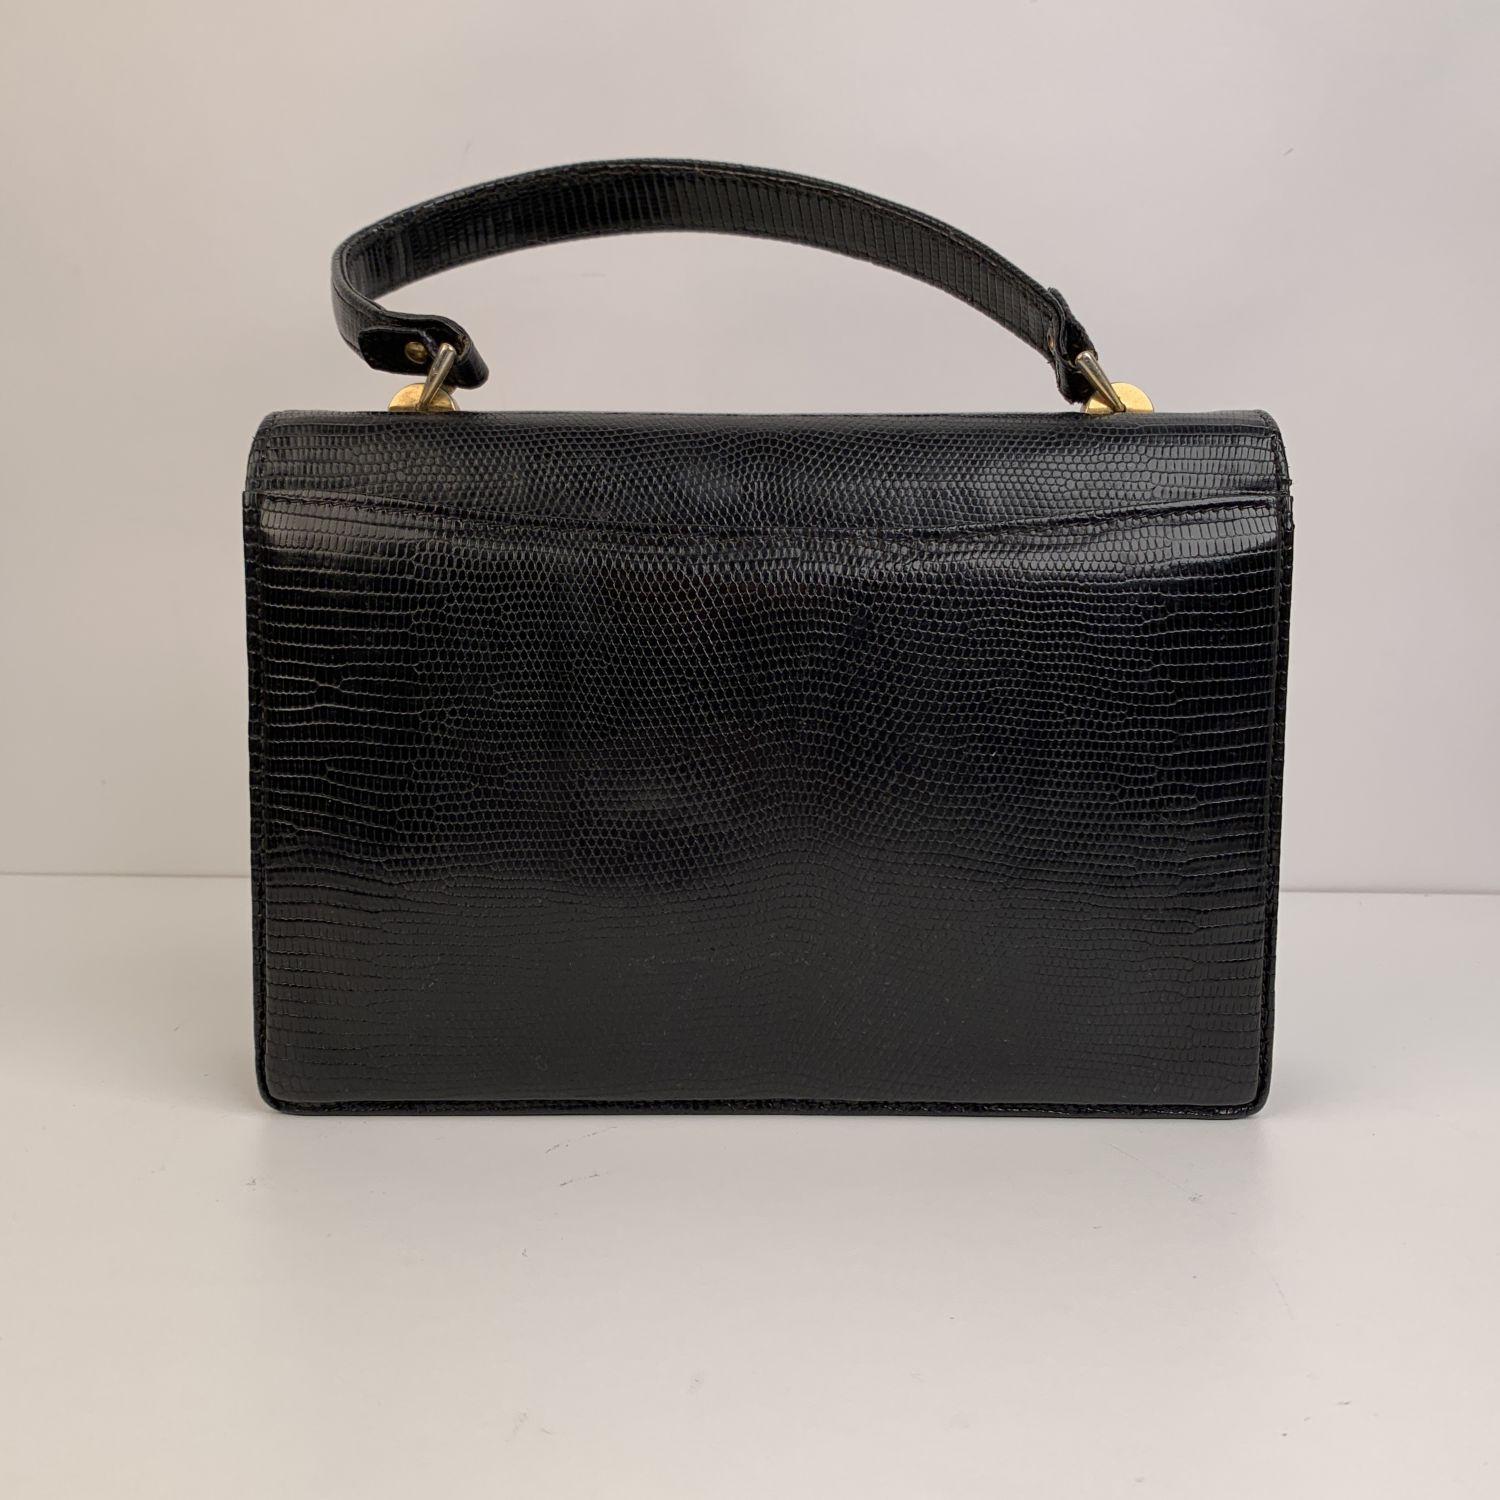 Gucci Vintage Black Leather Handbag Bakelite Top Handle Bag 2